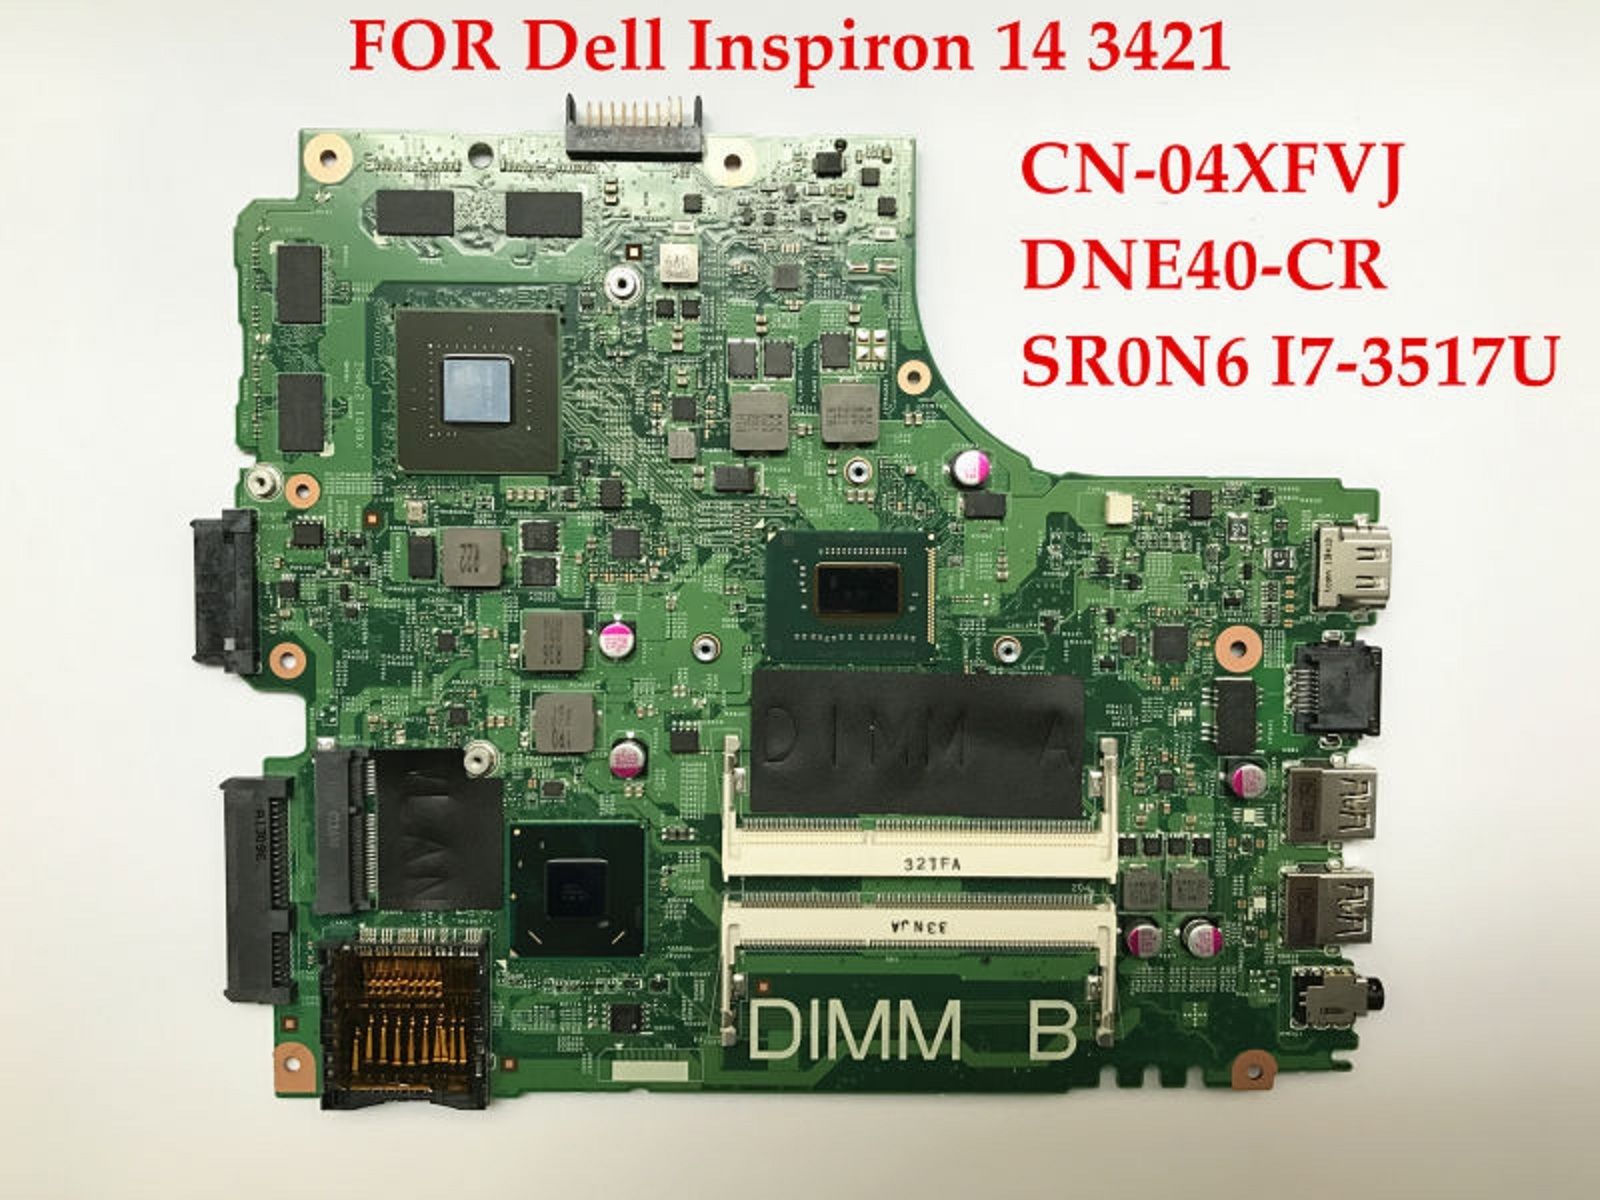 Dell 14R 3421 HM76 SR0N6 I7-3517U Motherboard CN-04XFVJ DNE40-CR